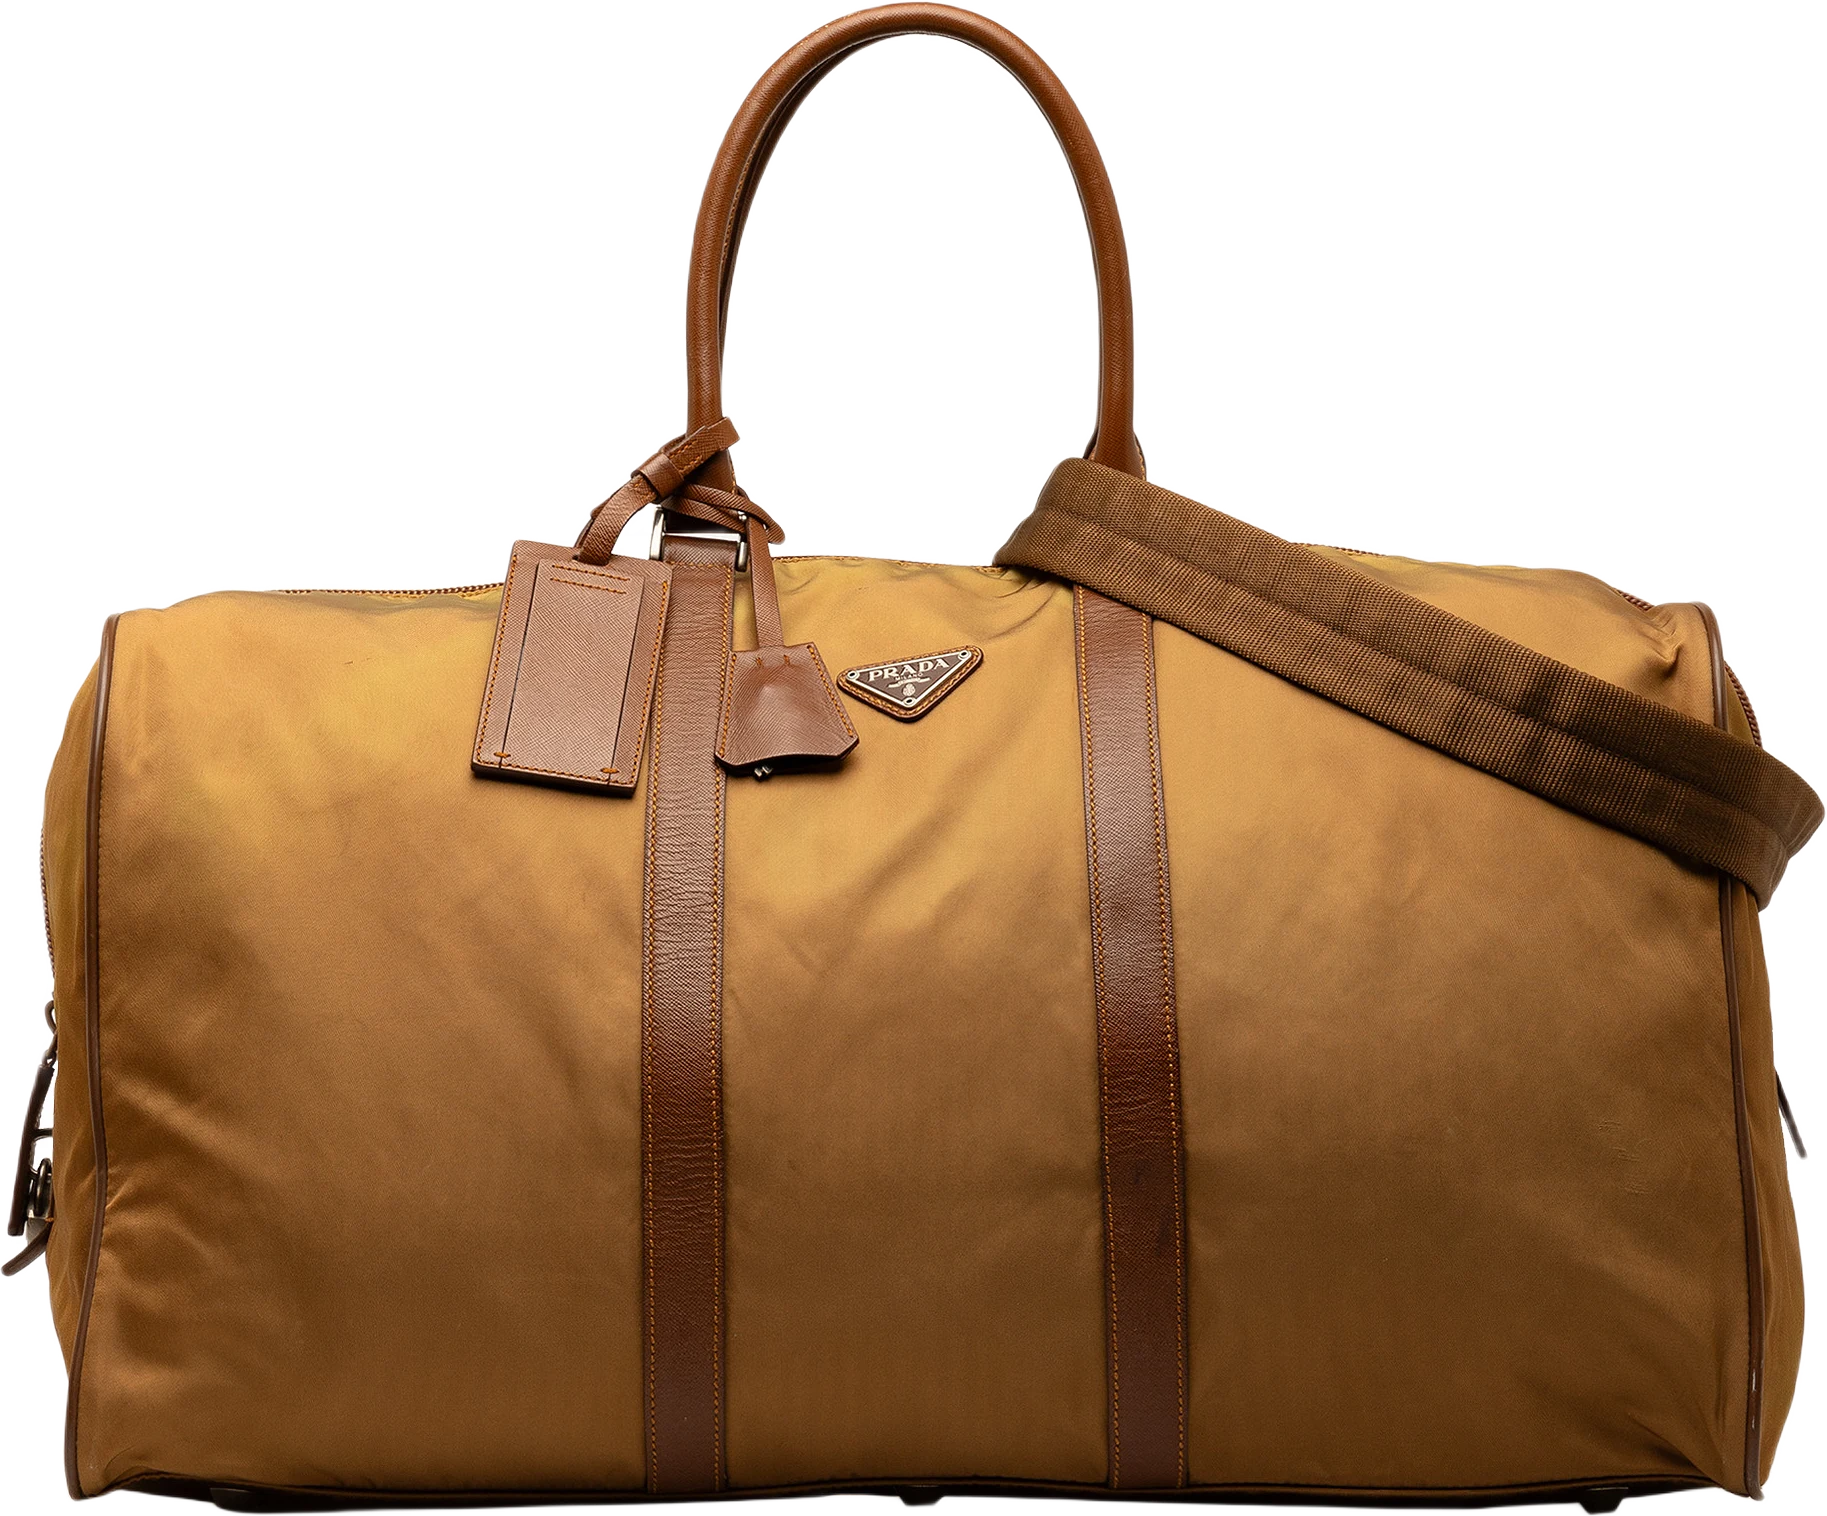 Prada Tessuto Travel Bag